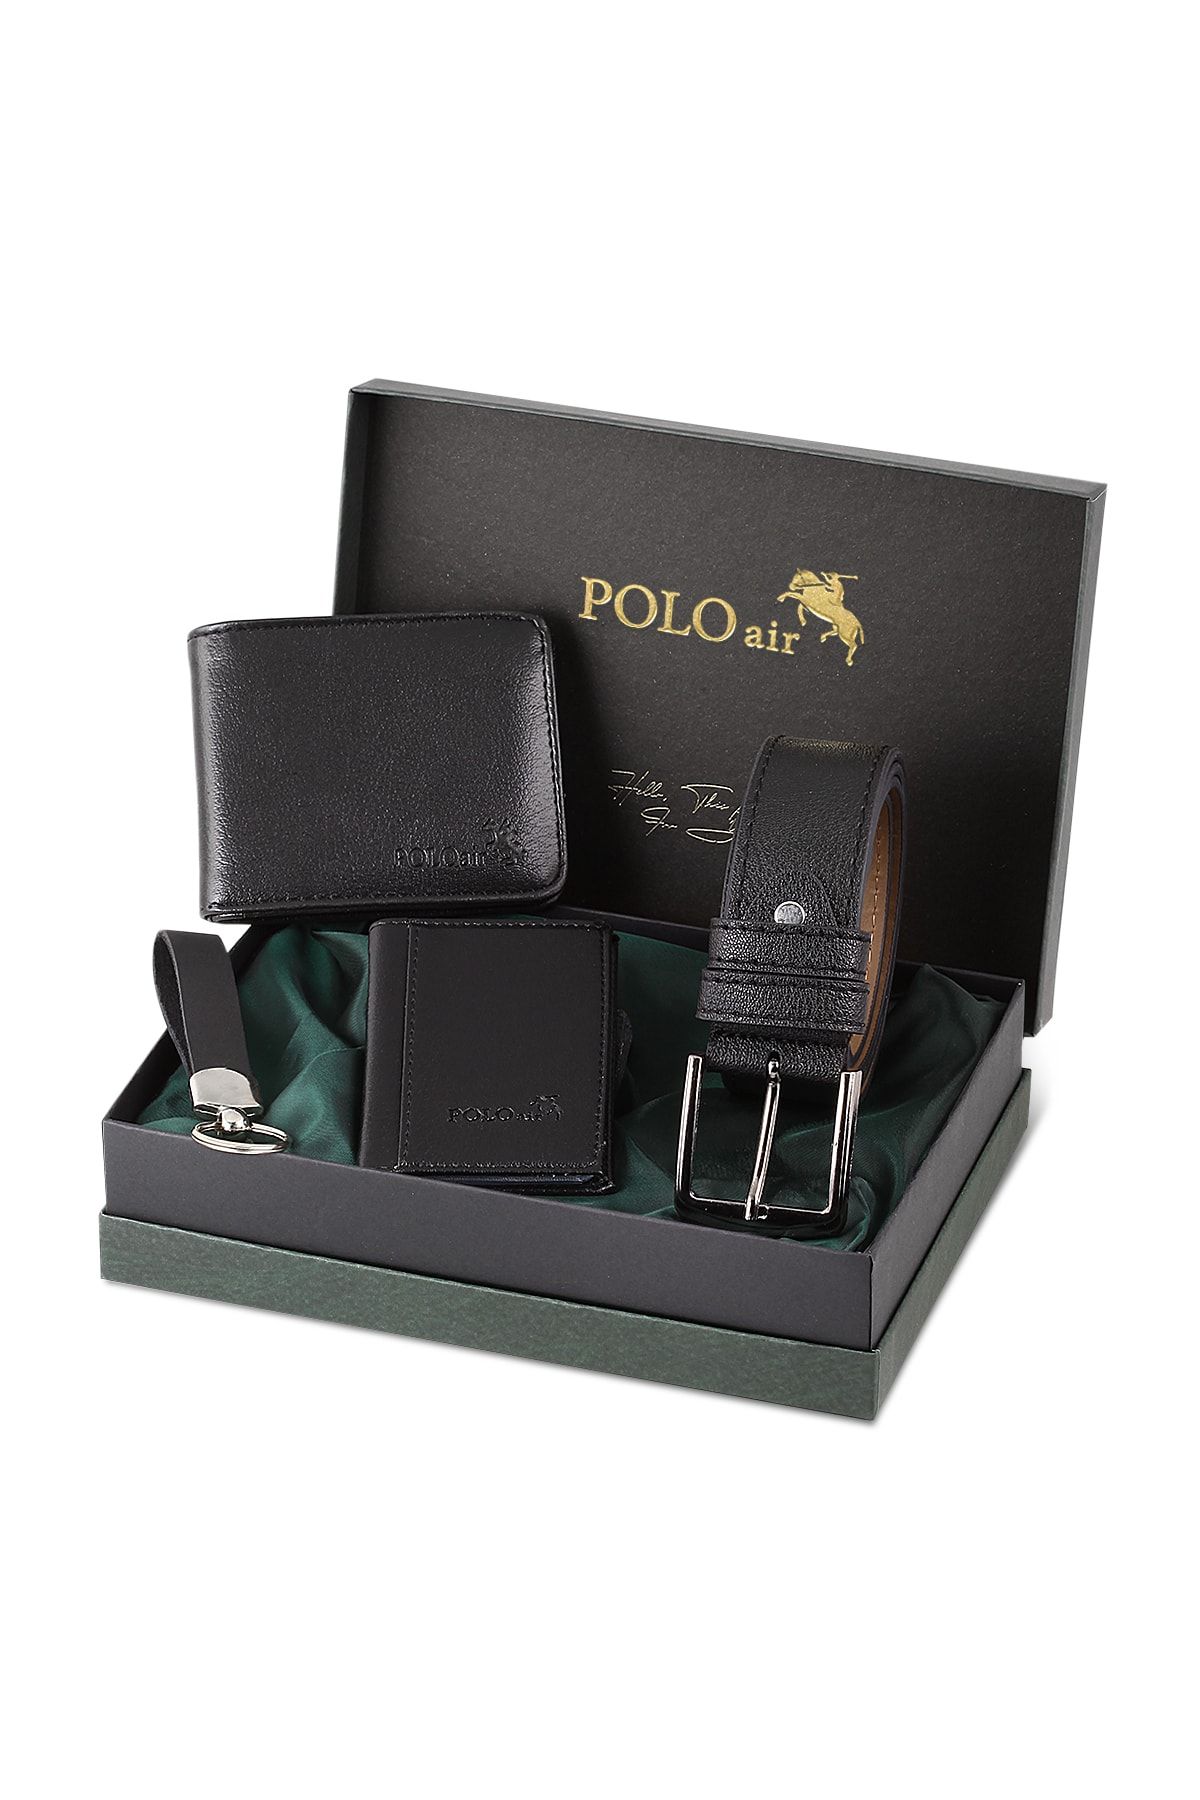 polo air Kemer Cüzdan Kartlık Anahtarlık Hediyelik Kombin Siyah Set